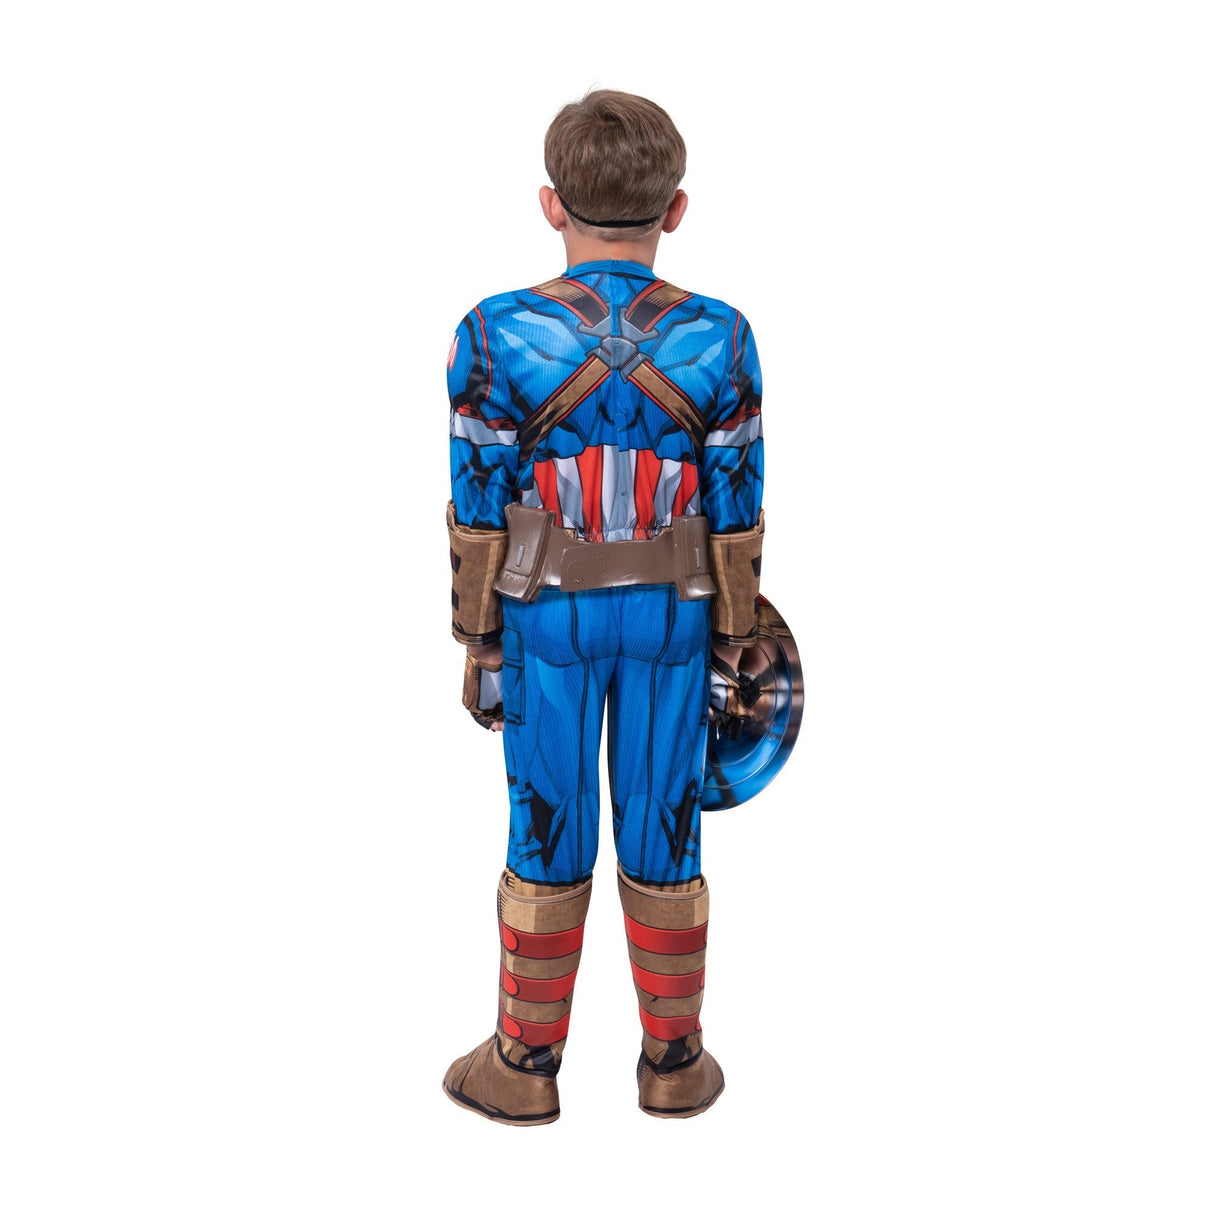 KROEGER Costumes Marvel Avengers Captain America Premium Costume with Shield for Kids